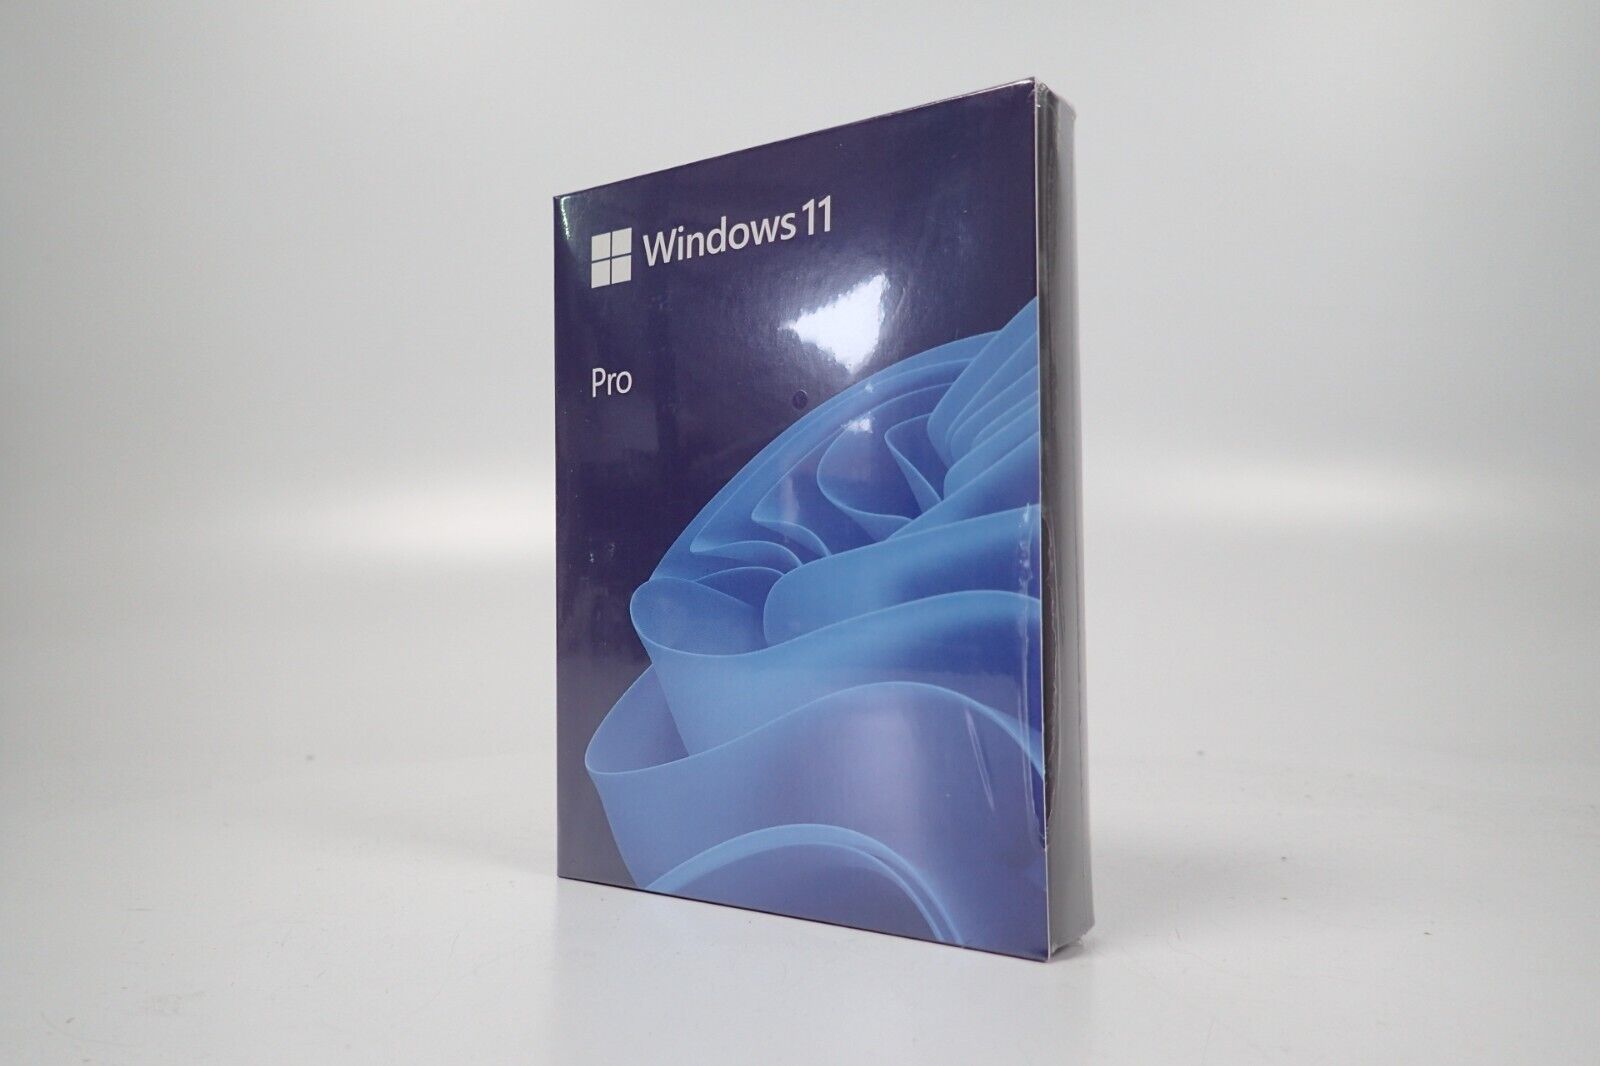 Brand New Microsoft Windows 11 Pro 64-Bit USB Flash Drive w/ Product Card Sealed